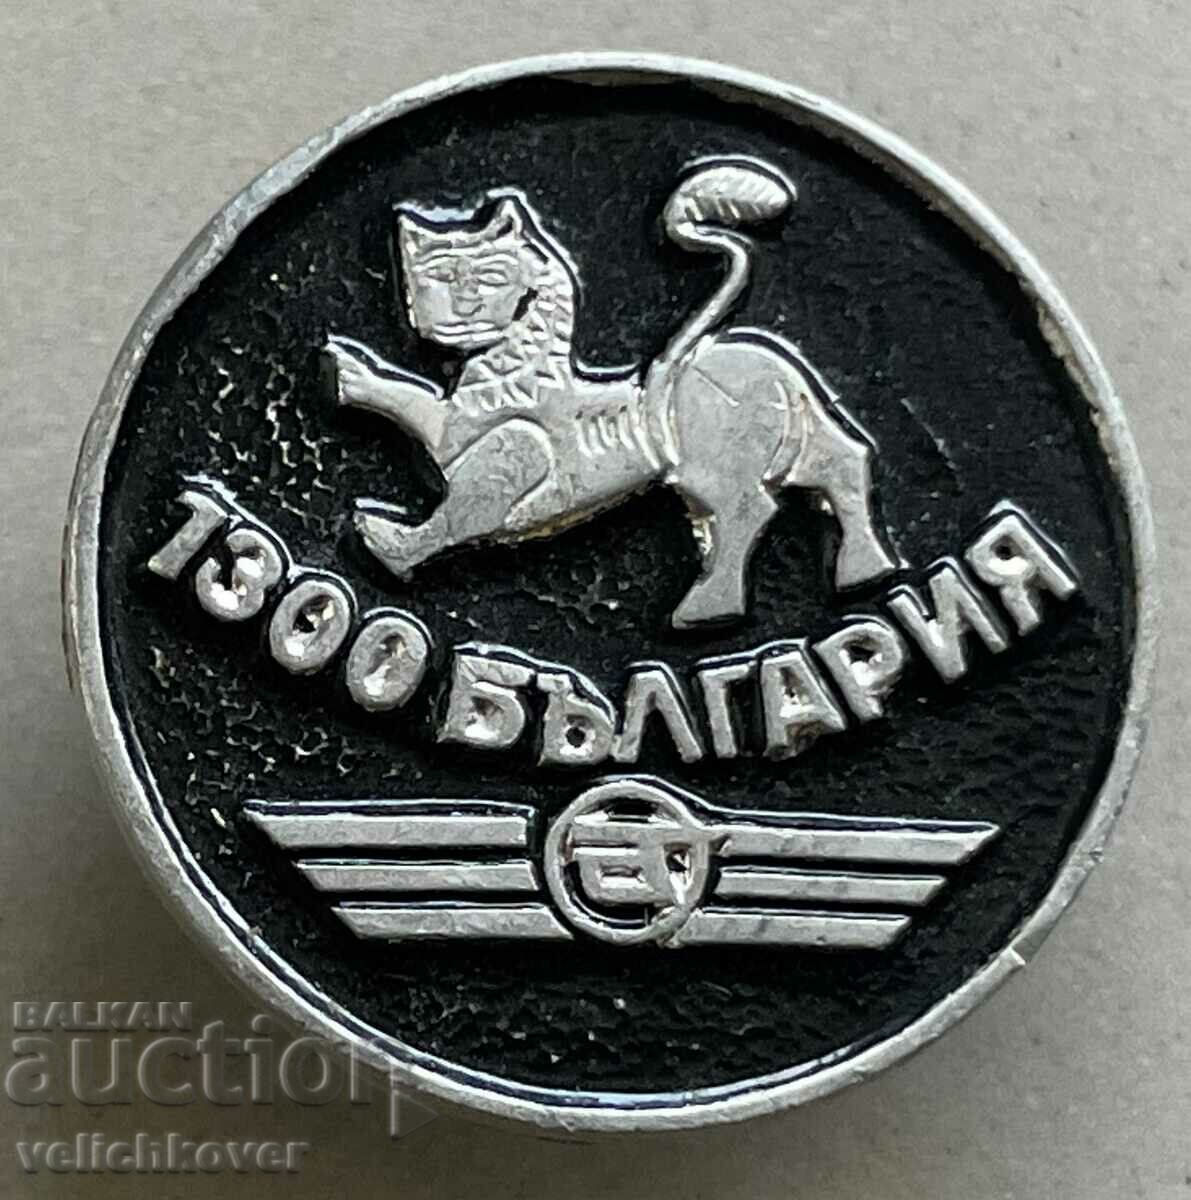 33454 Bulgaria semn Autotransport 1300 681-1981